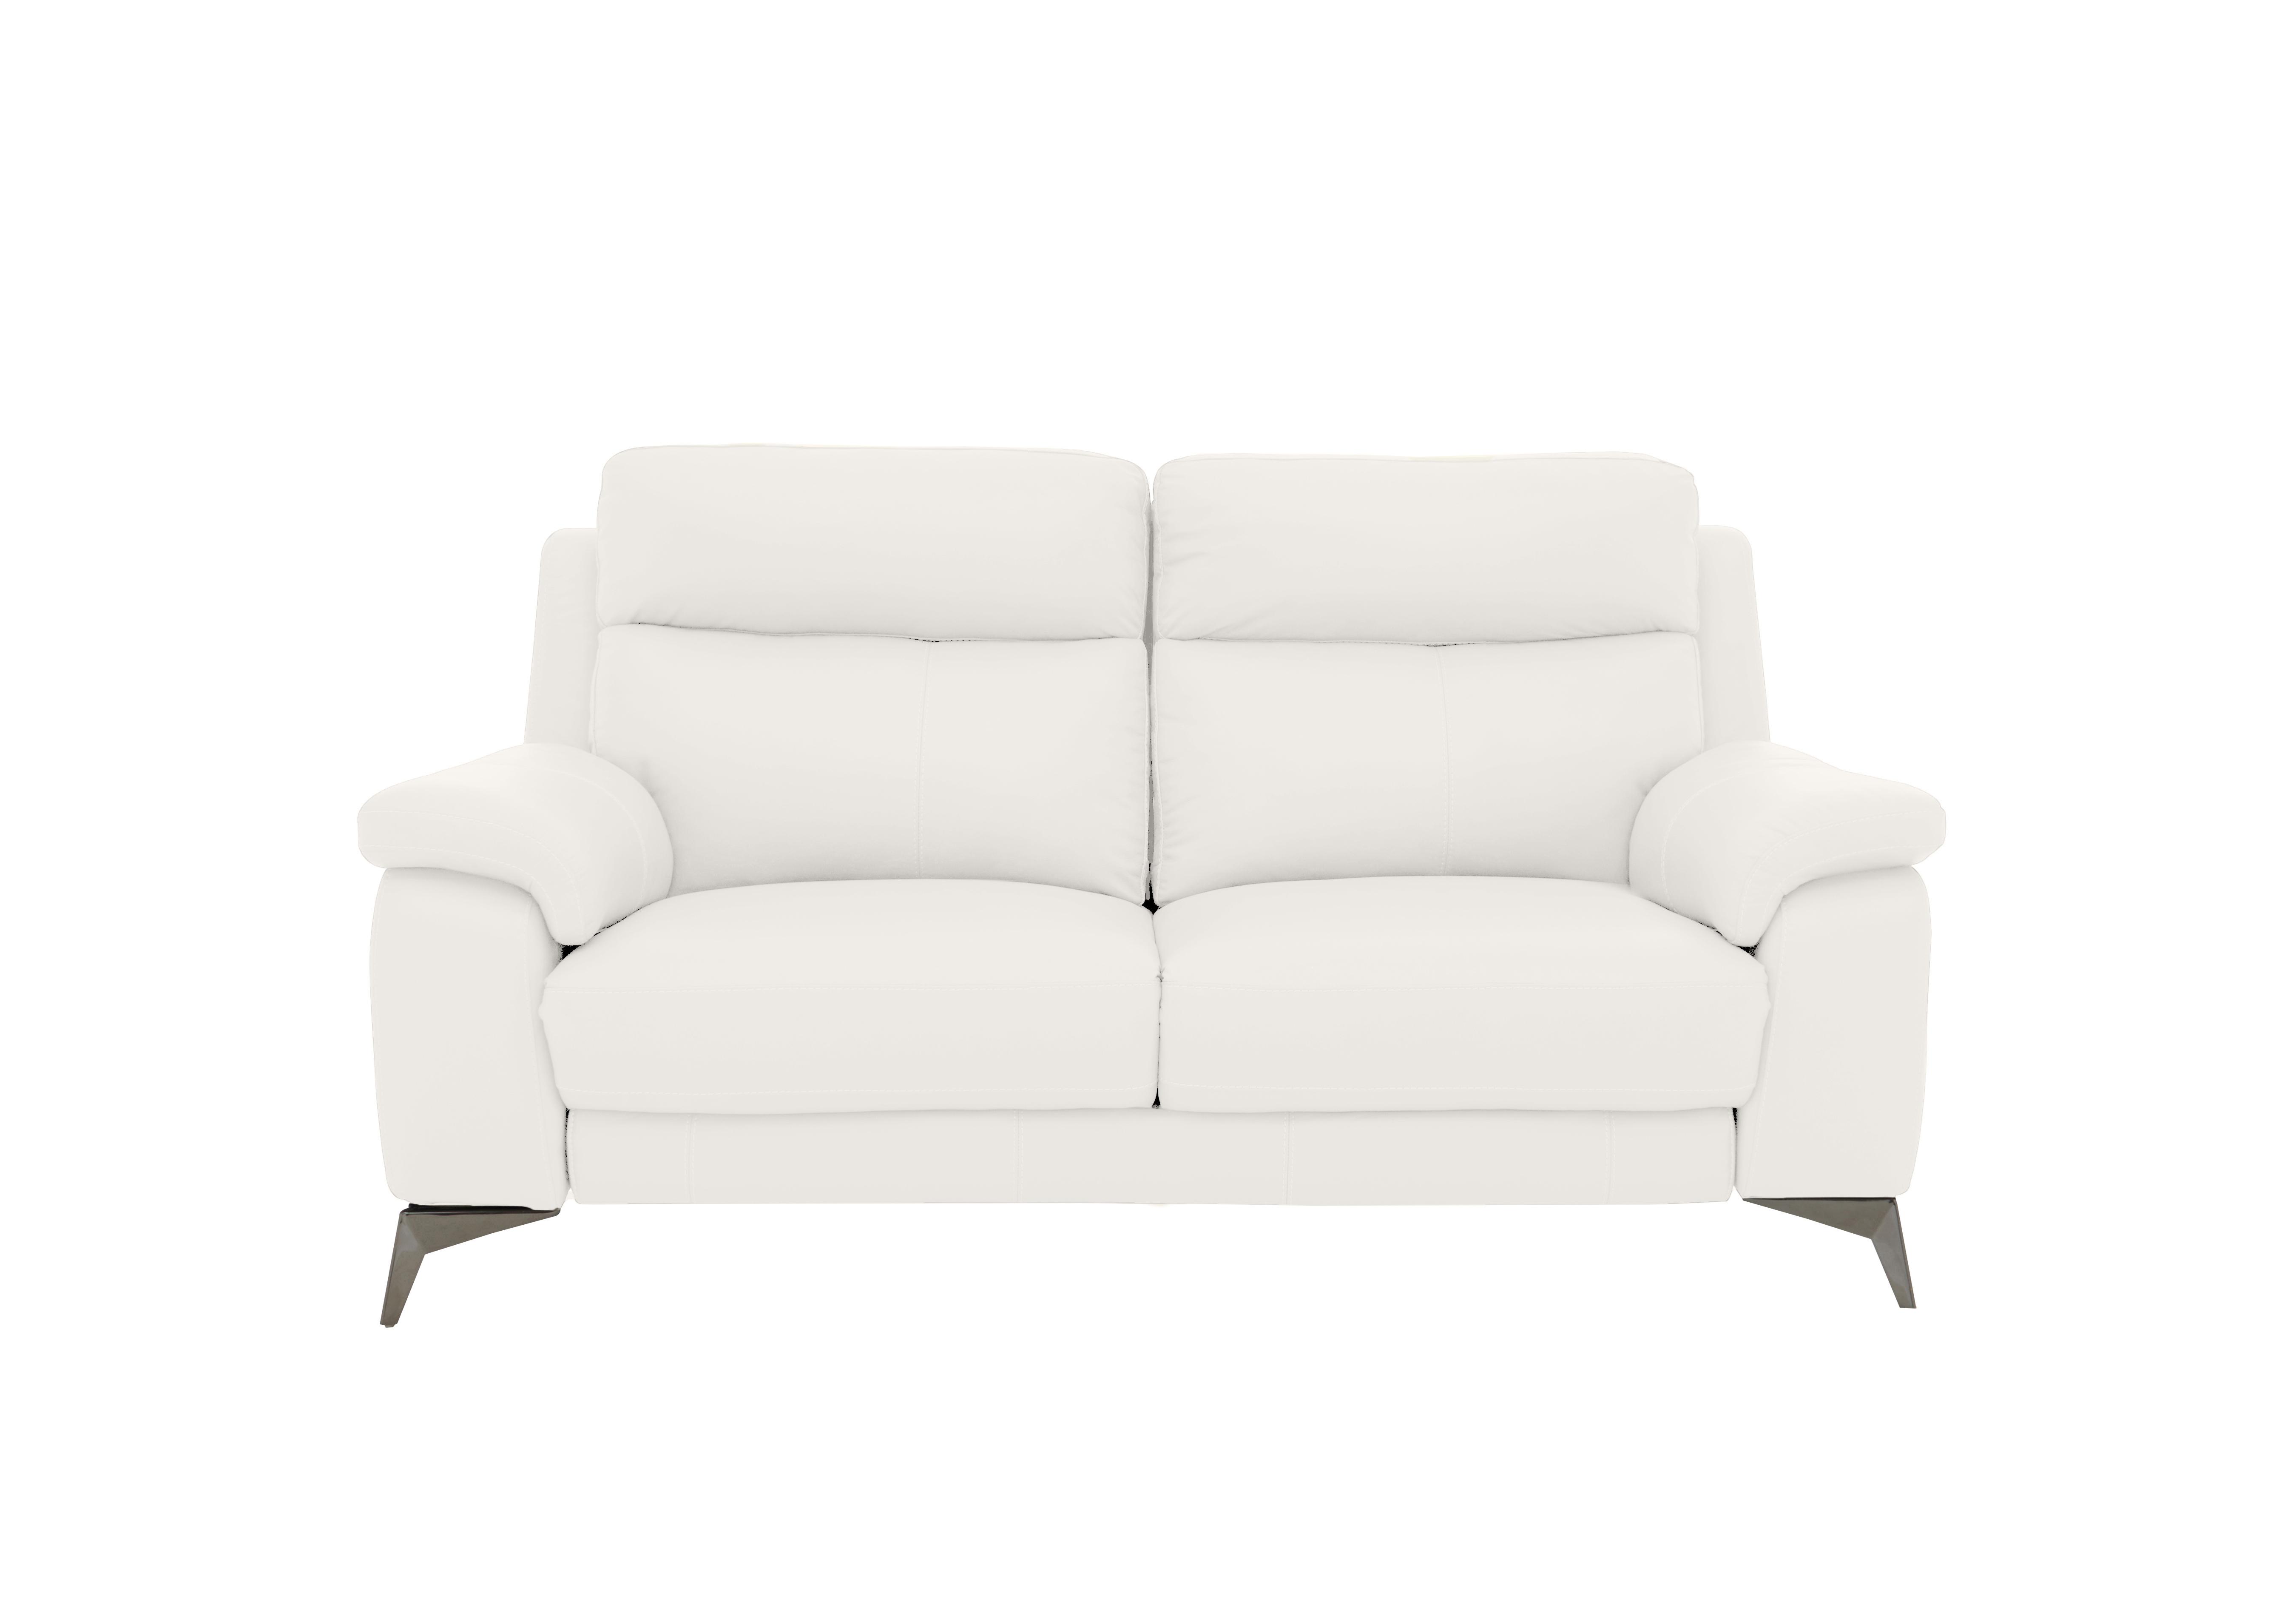 Missouri 2 Seater Leather Sofa in Bv-744d Star White on Furniture Village